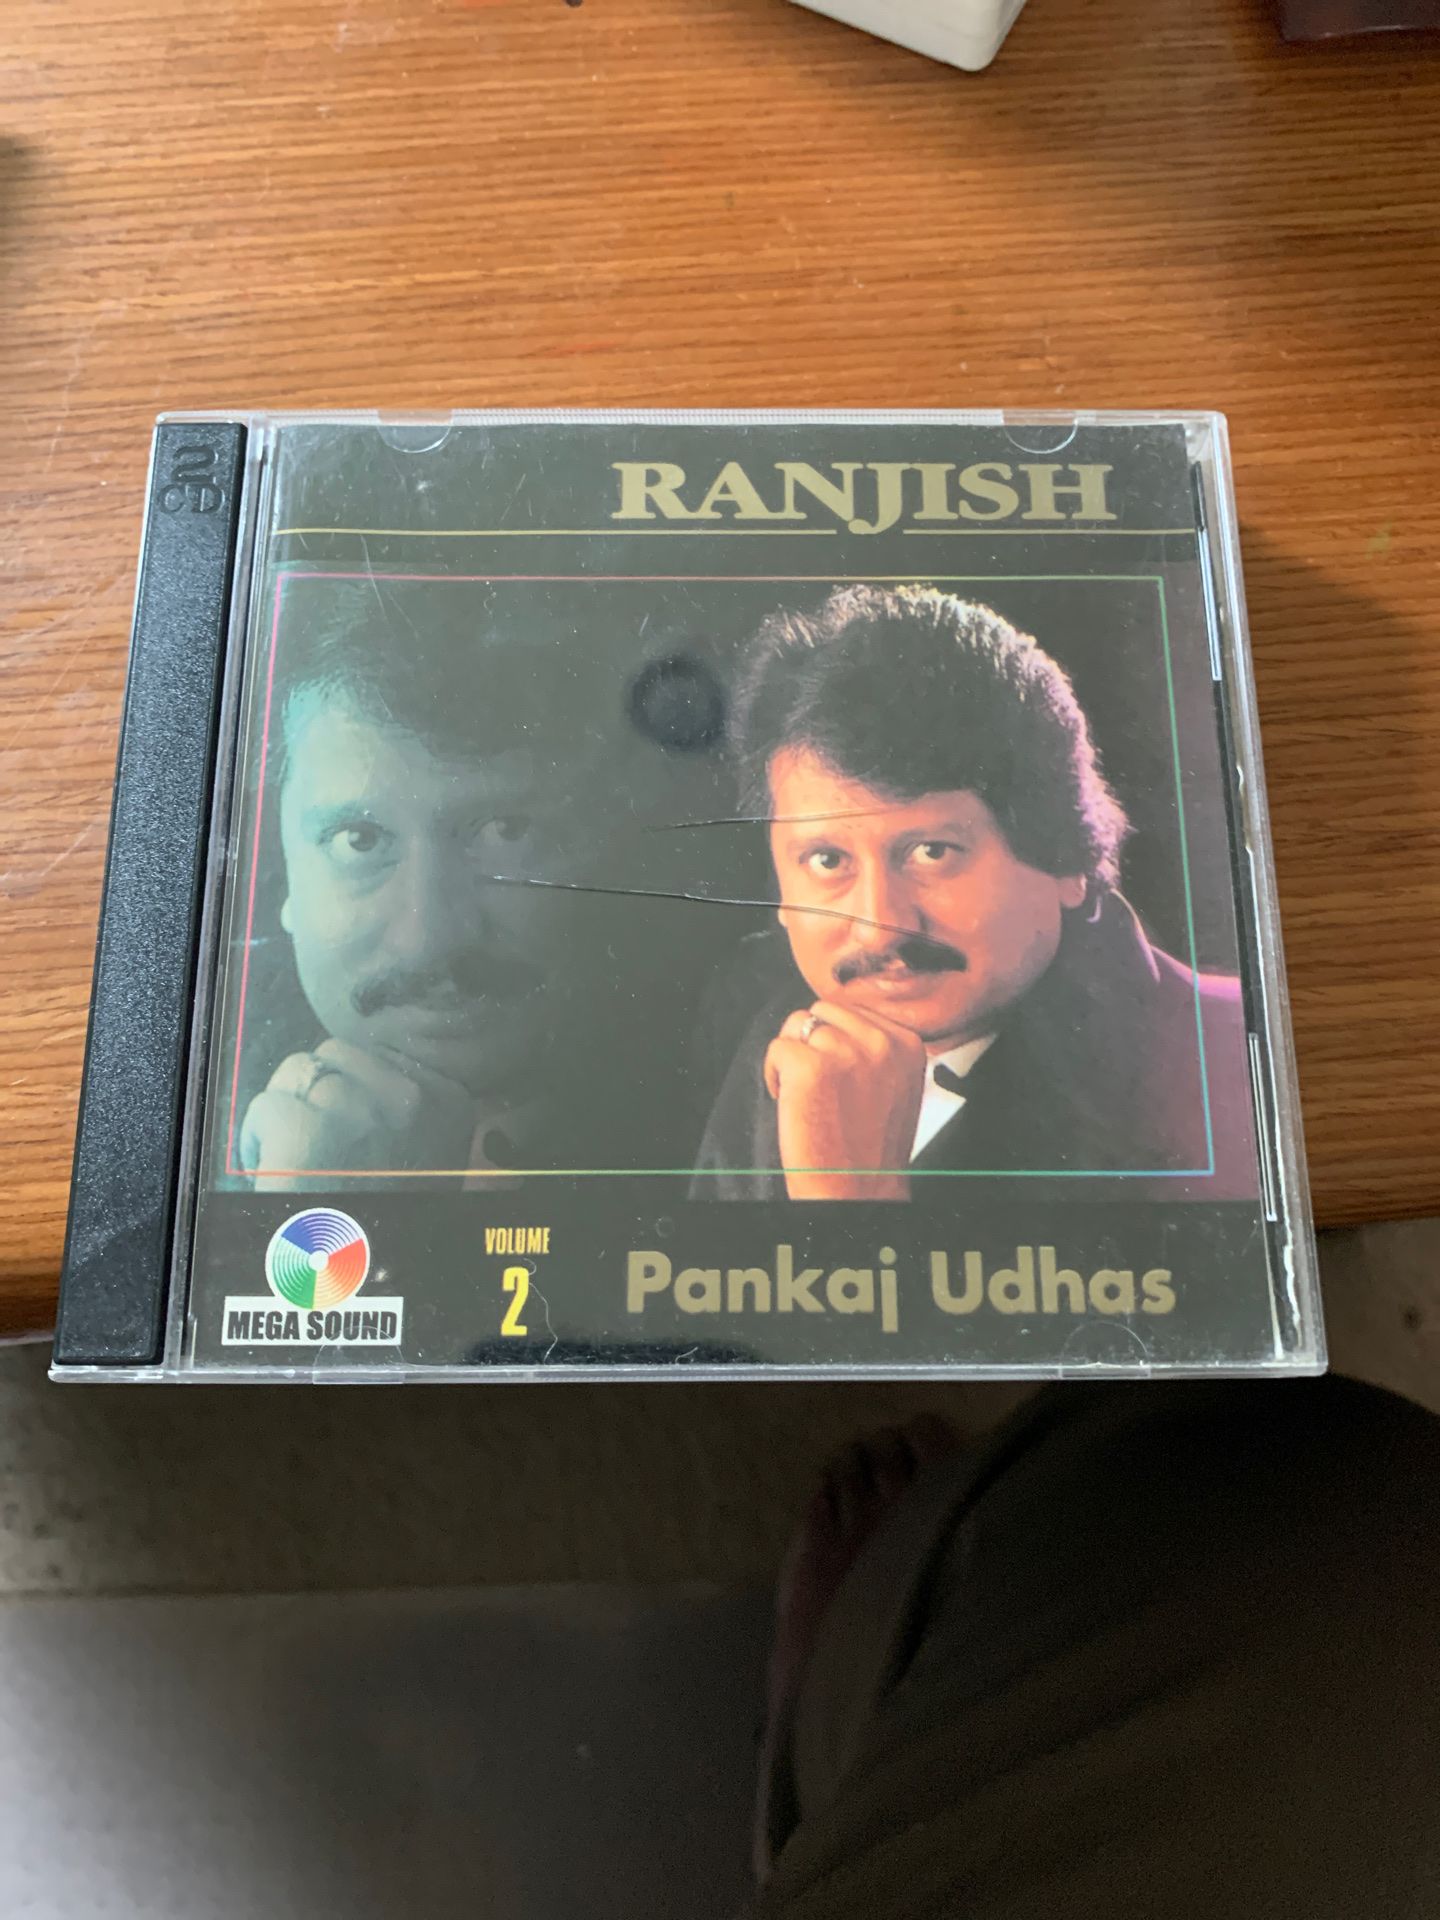 FREE Audio CD “Ranjish” Volume 2 by Pankaj Udhas